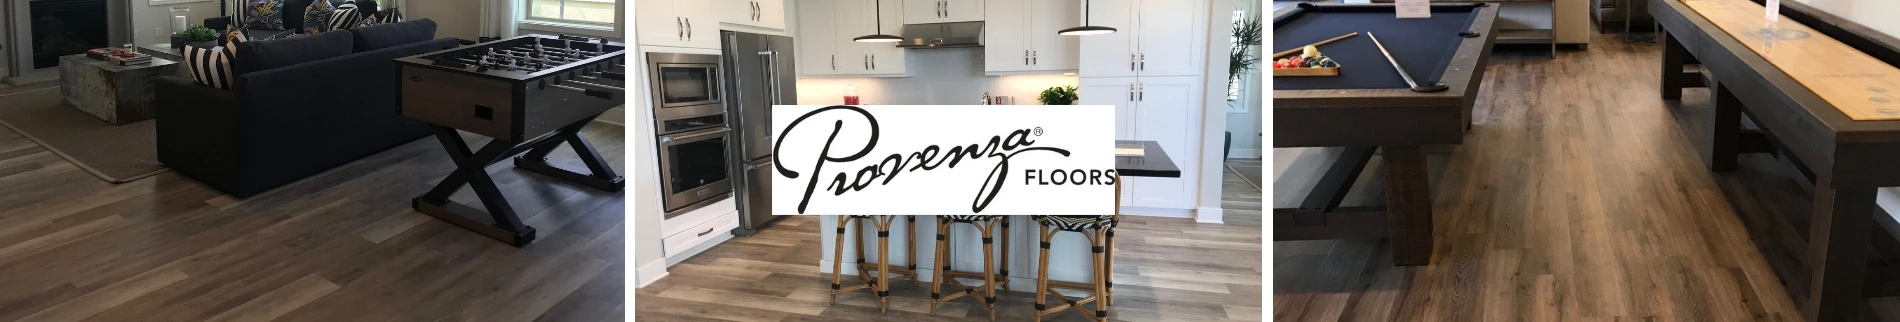 provenza flooring